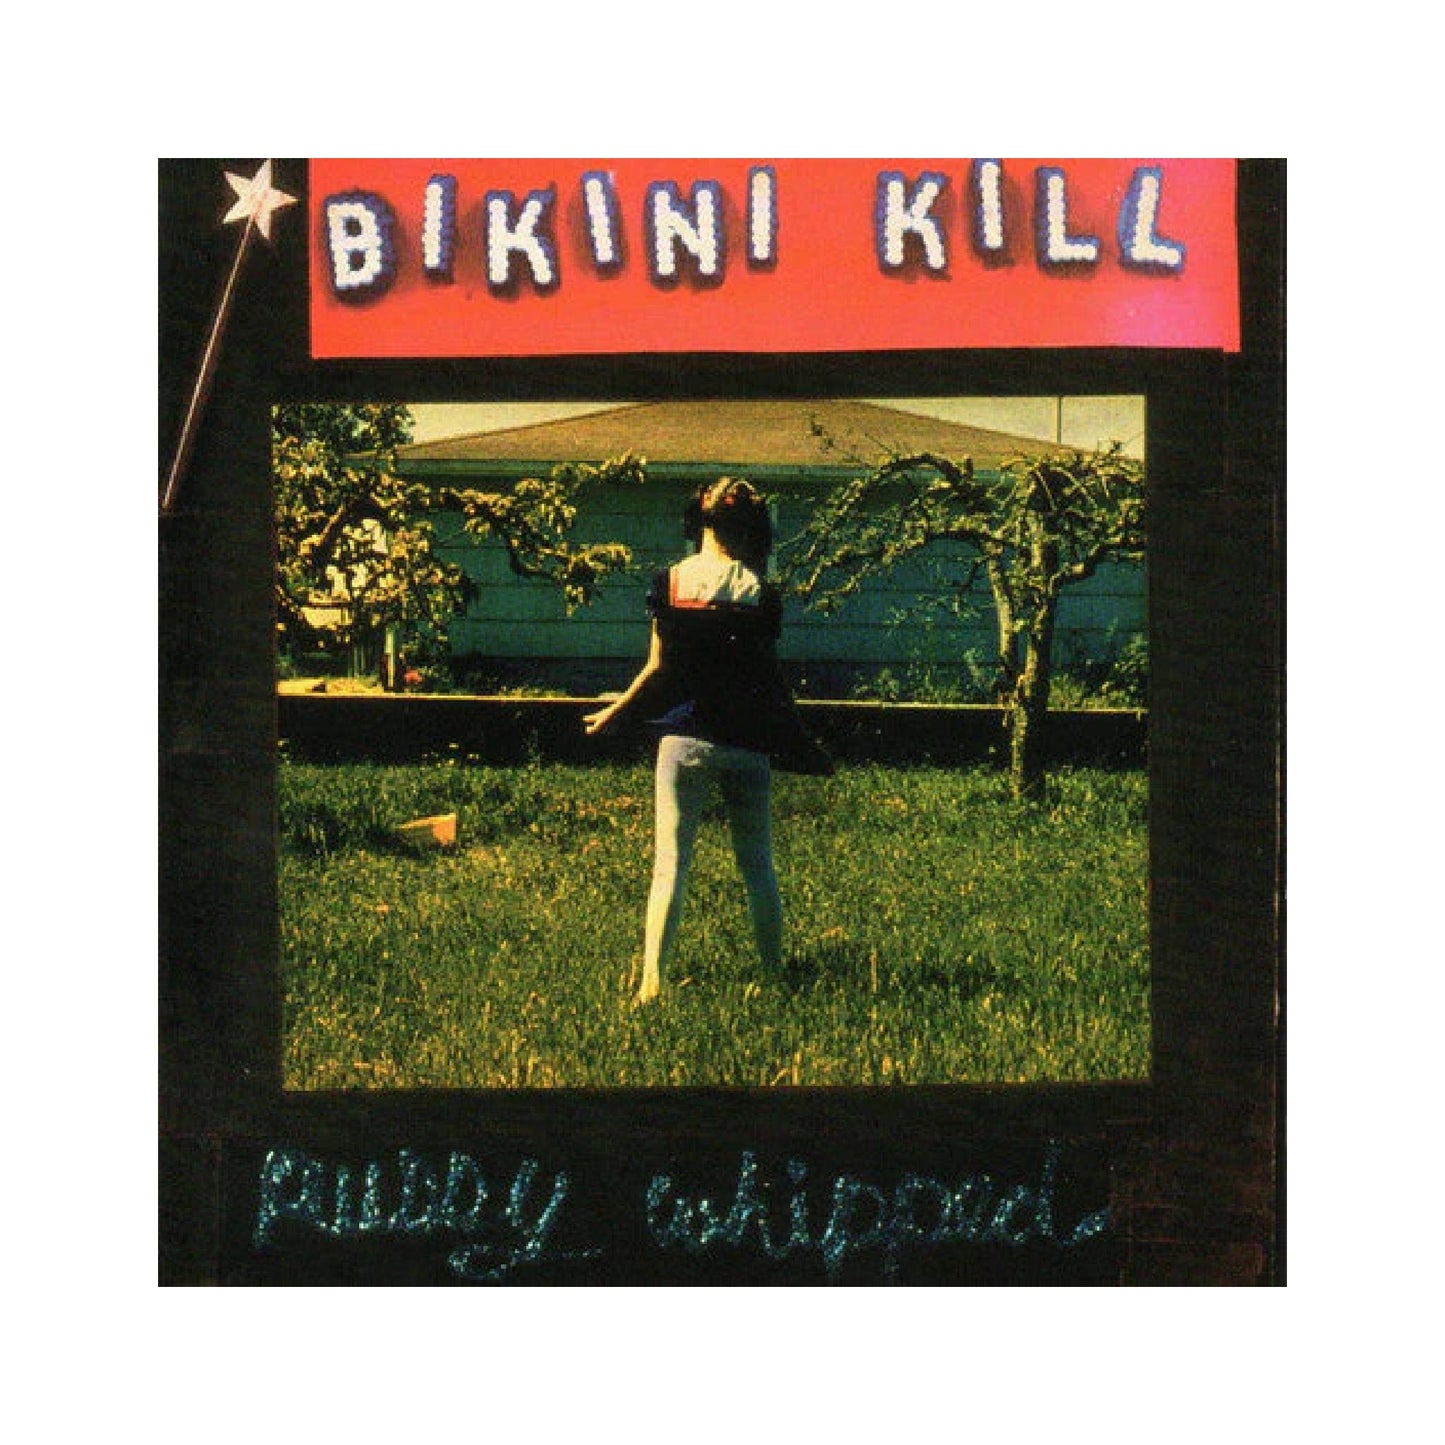 Bikini Kill - Pussy Whipped LP (black vinyl)